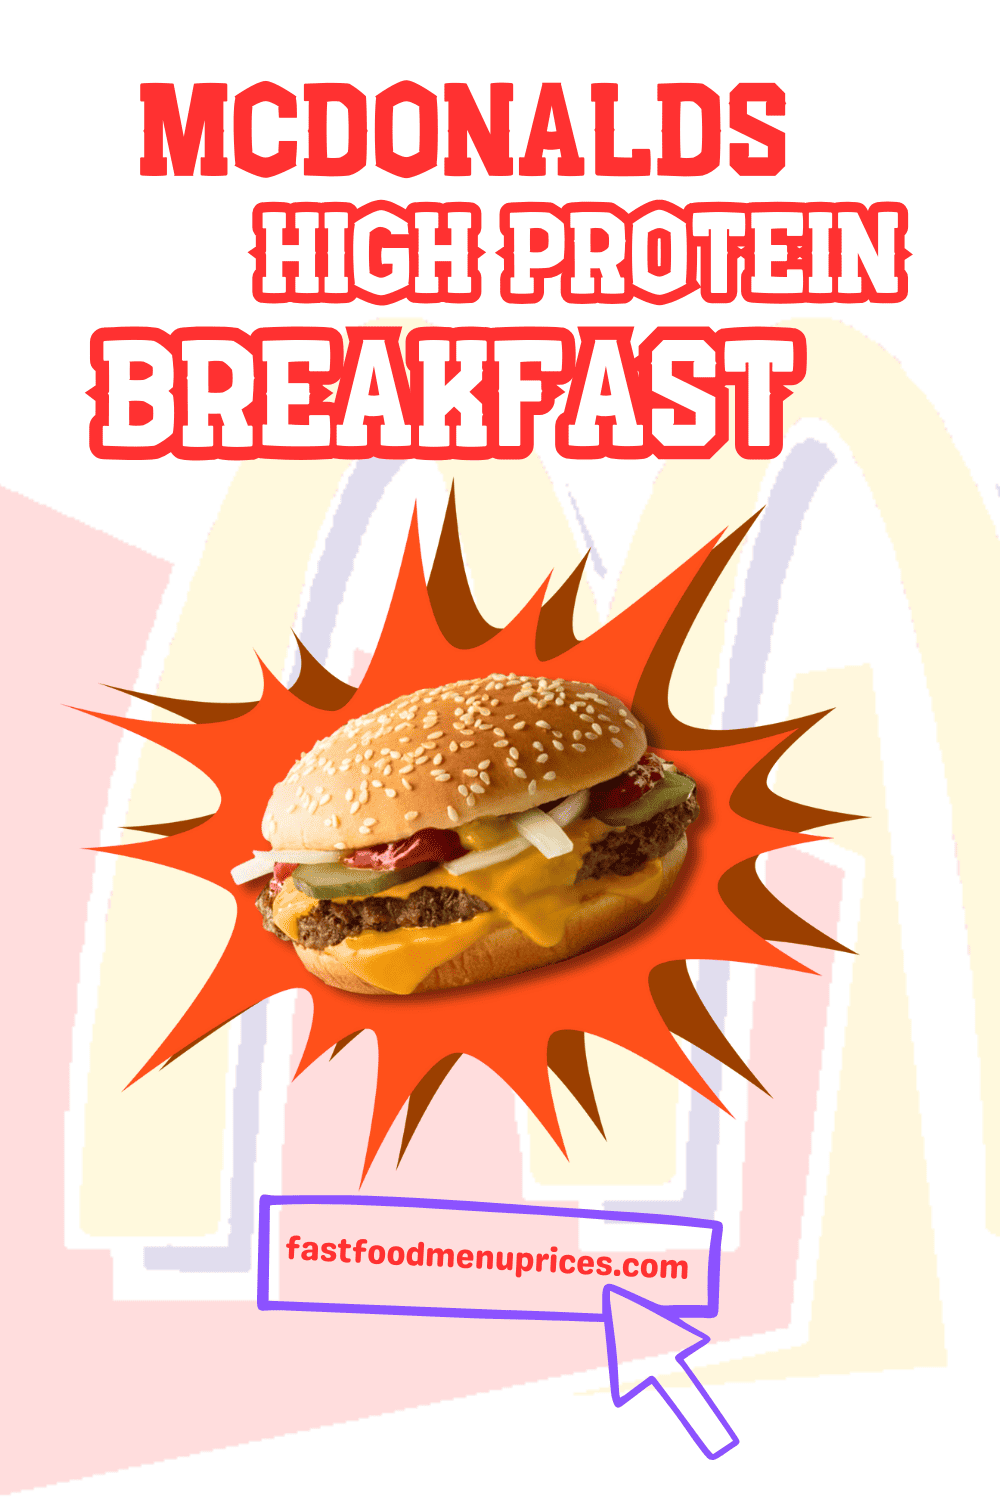 Mcdonalds high protein breakfast featuring a secret menu.